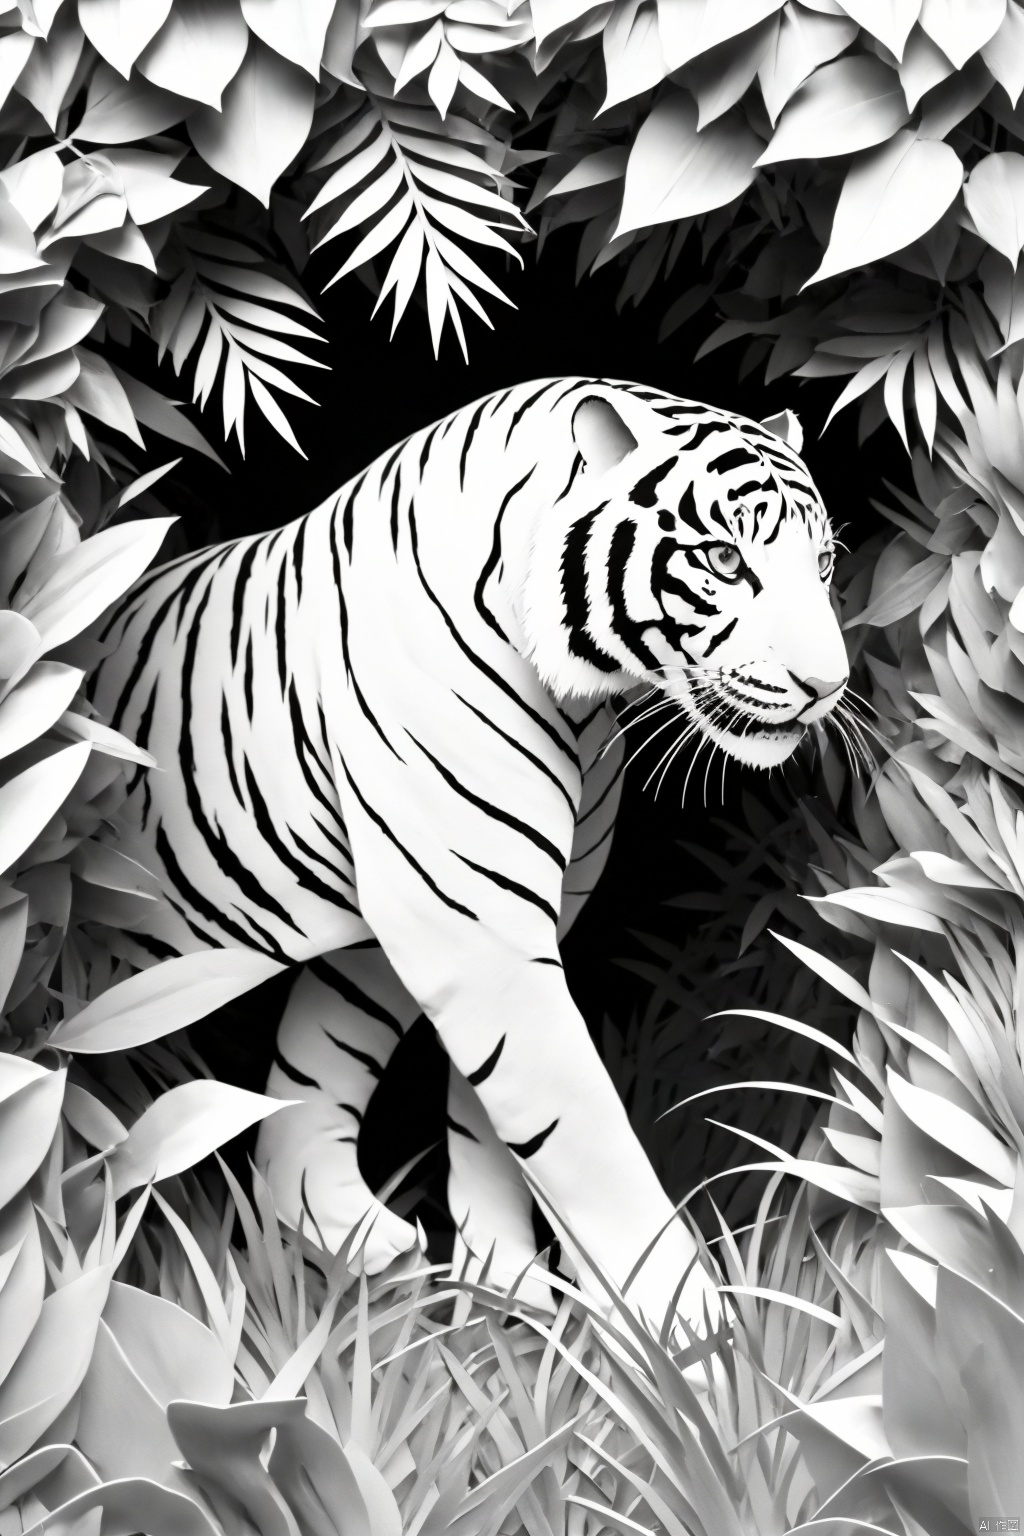 fdjz
solo
monochrome
flower
no humans
animal
leaf
plant
stairs
tiger
white theme